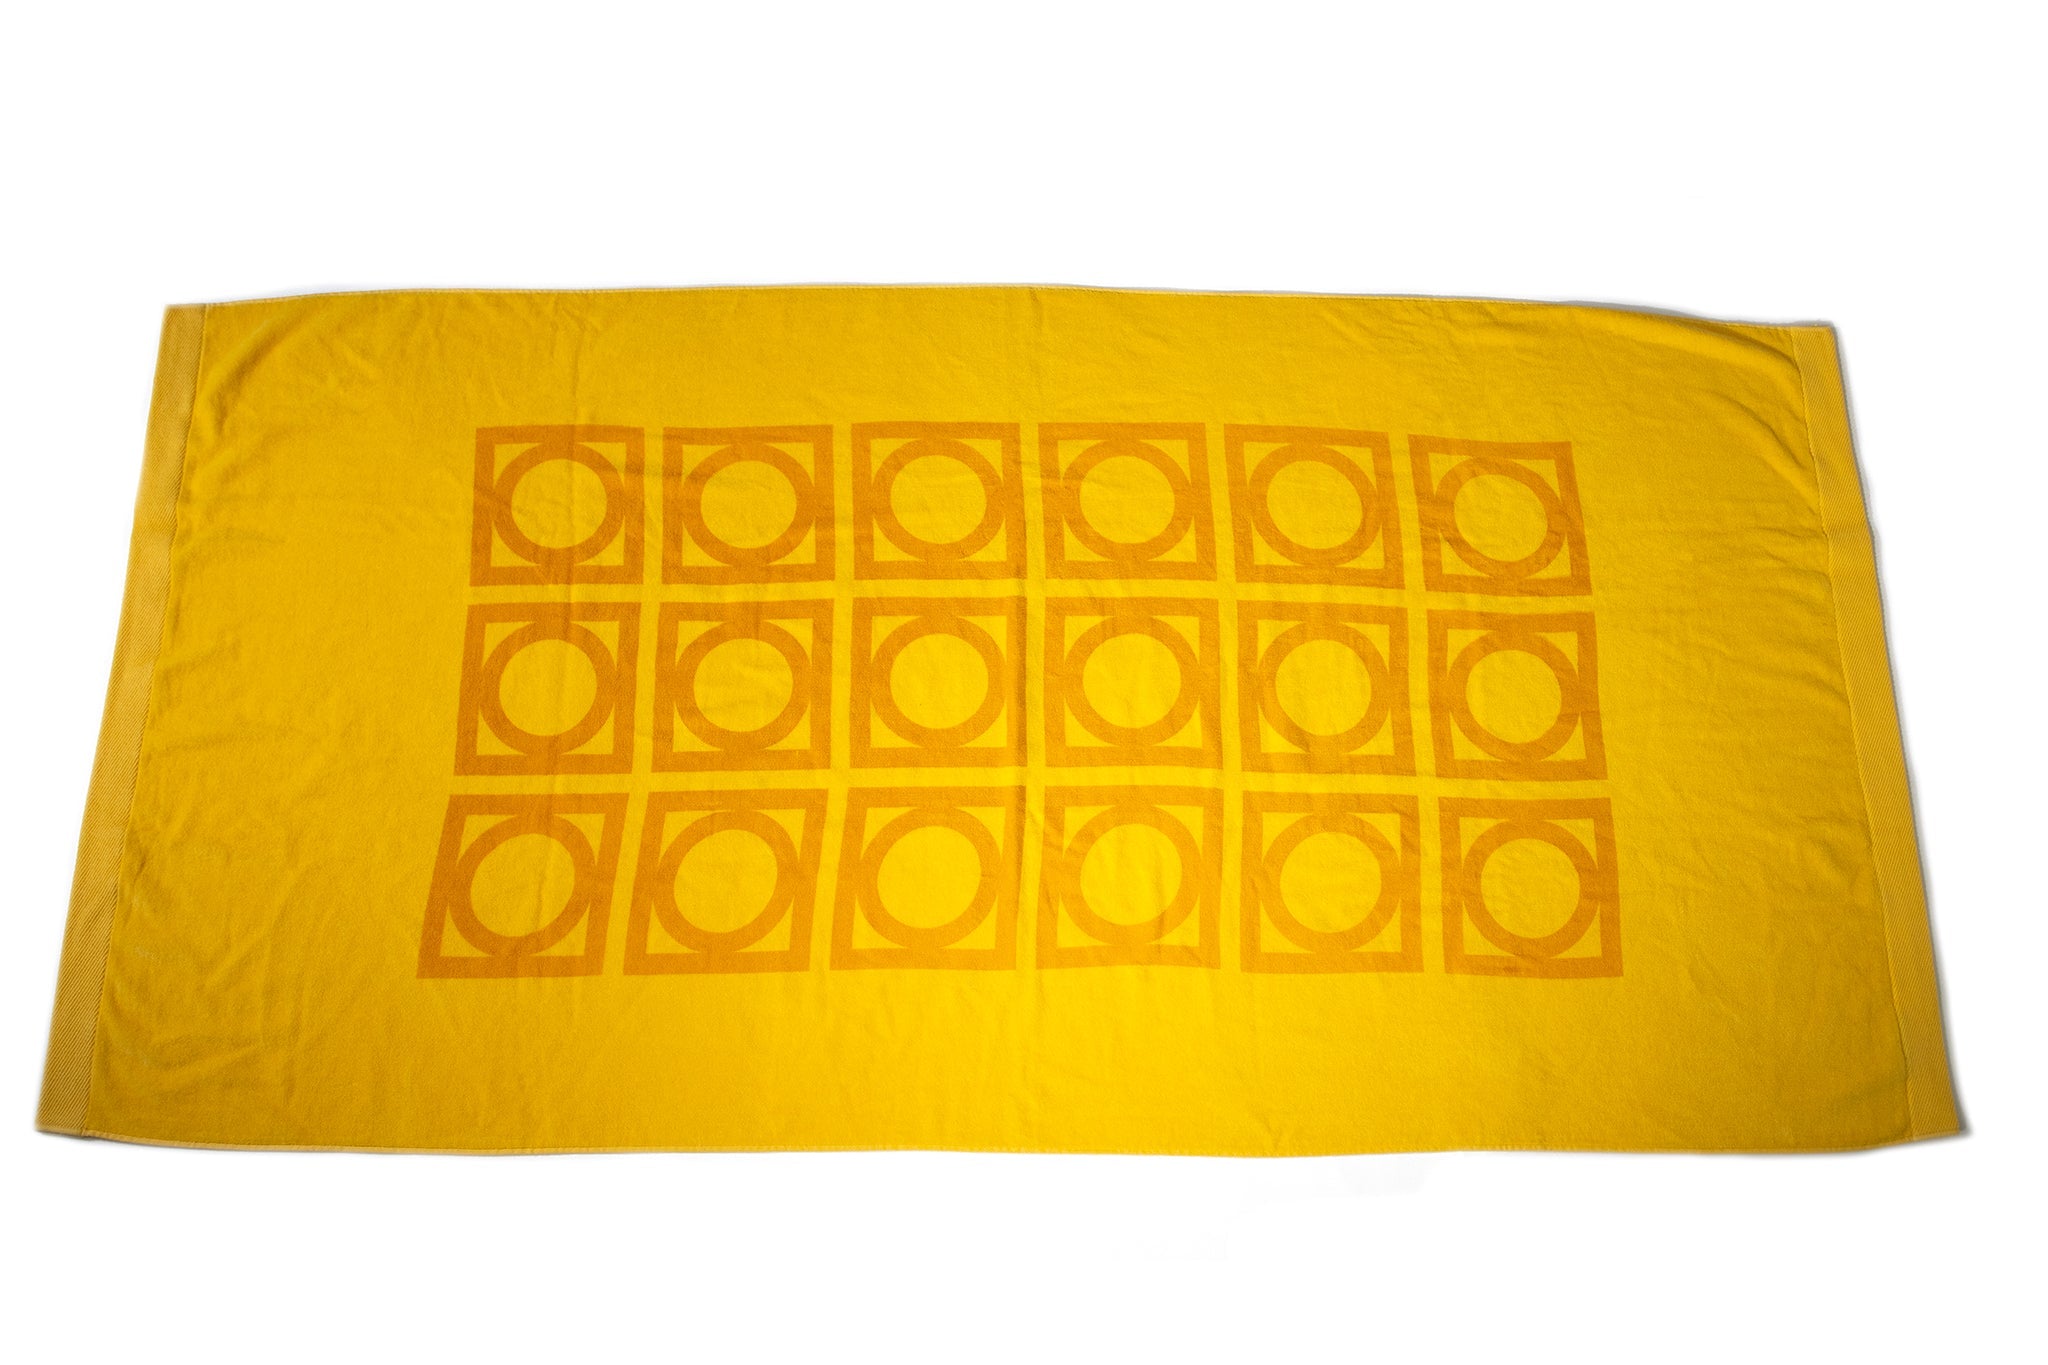 Sunmor Luxury Towel Collection - Destination PSP